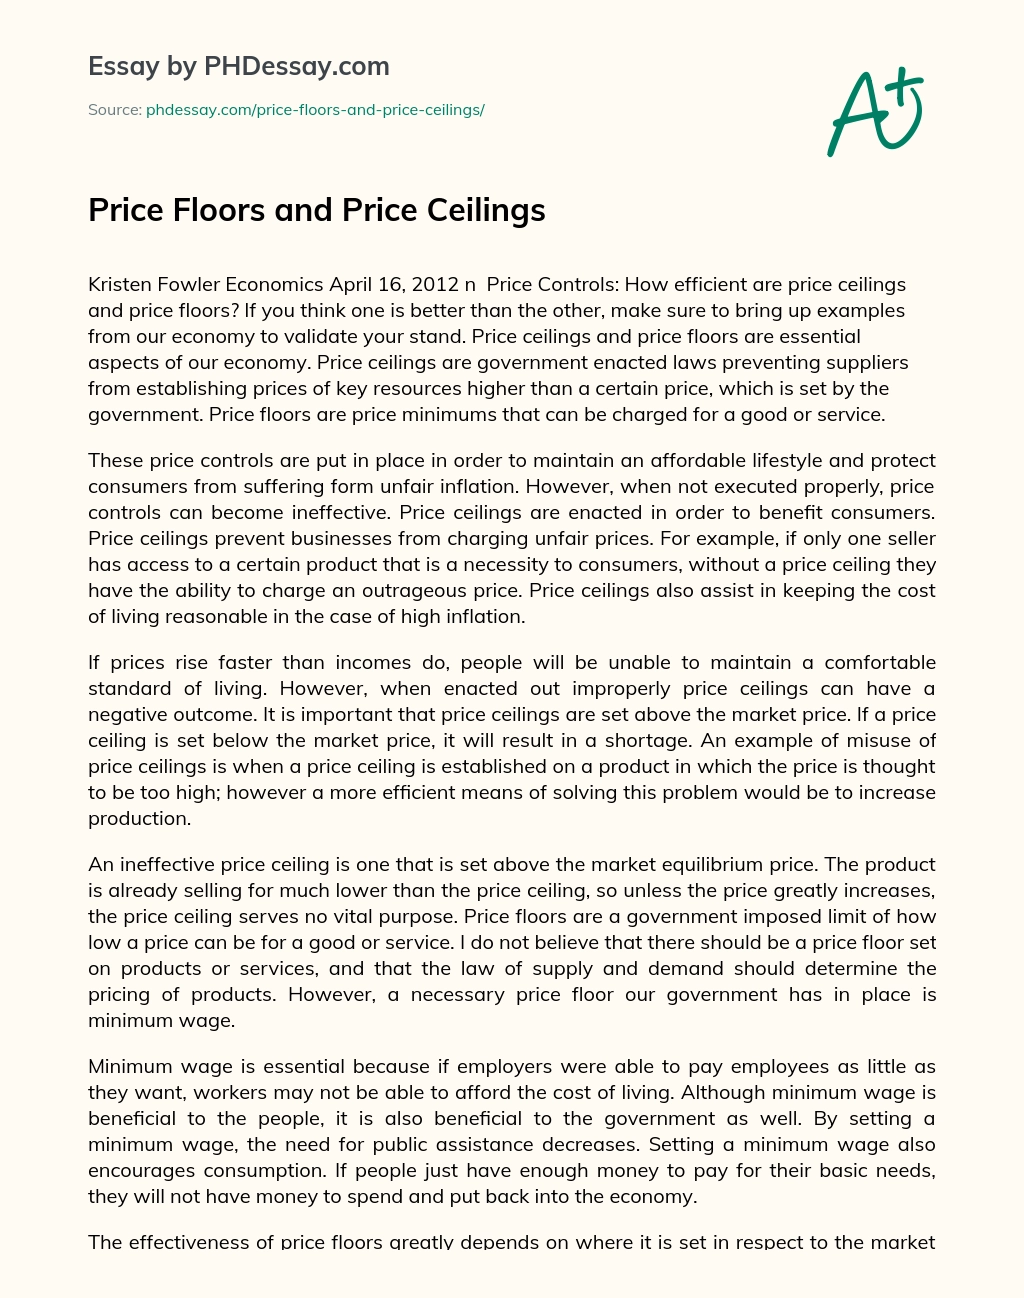 Price Floors and Price Ceilings essay